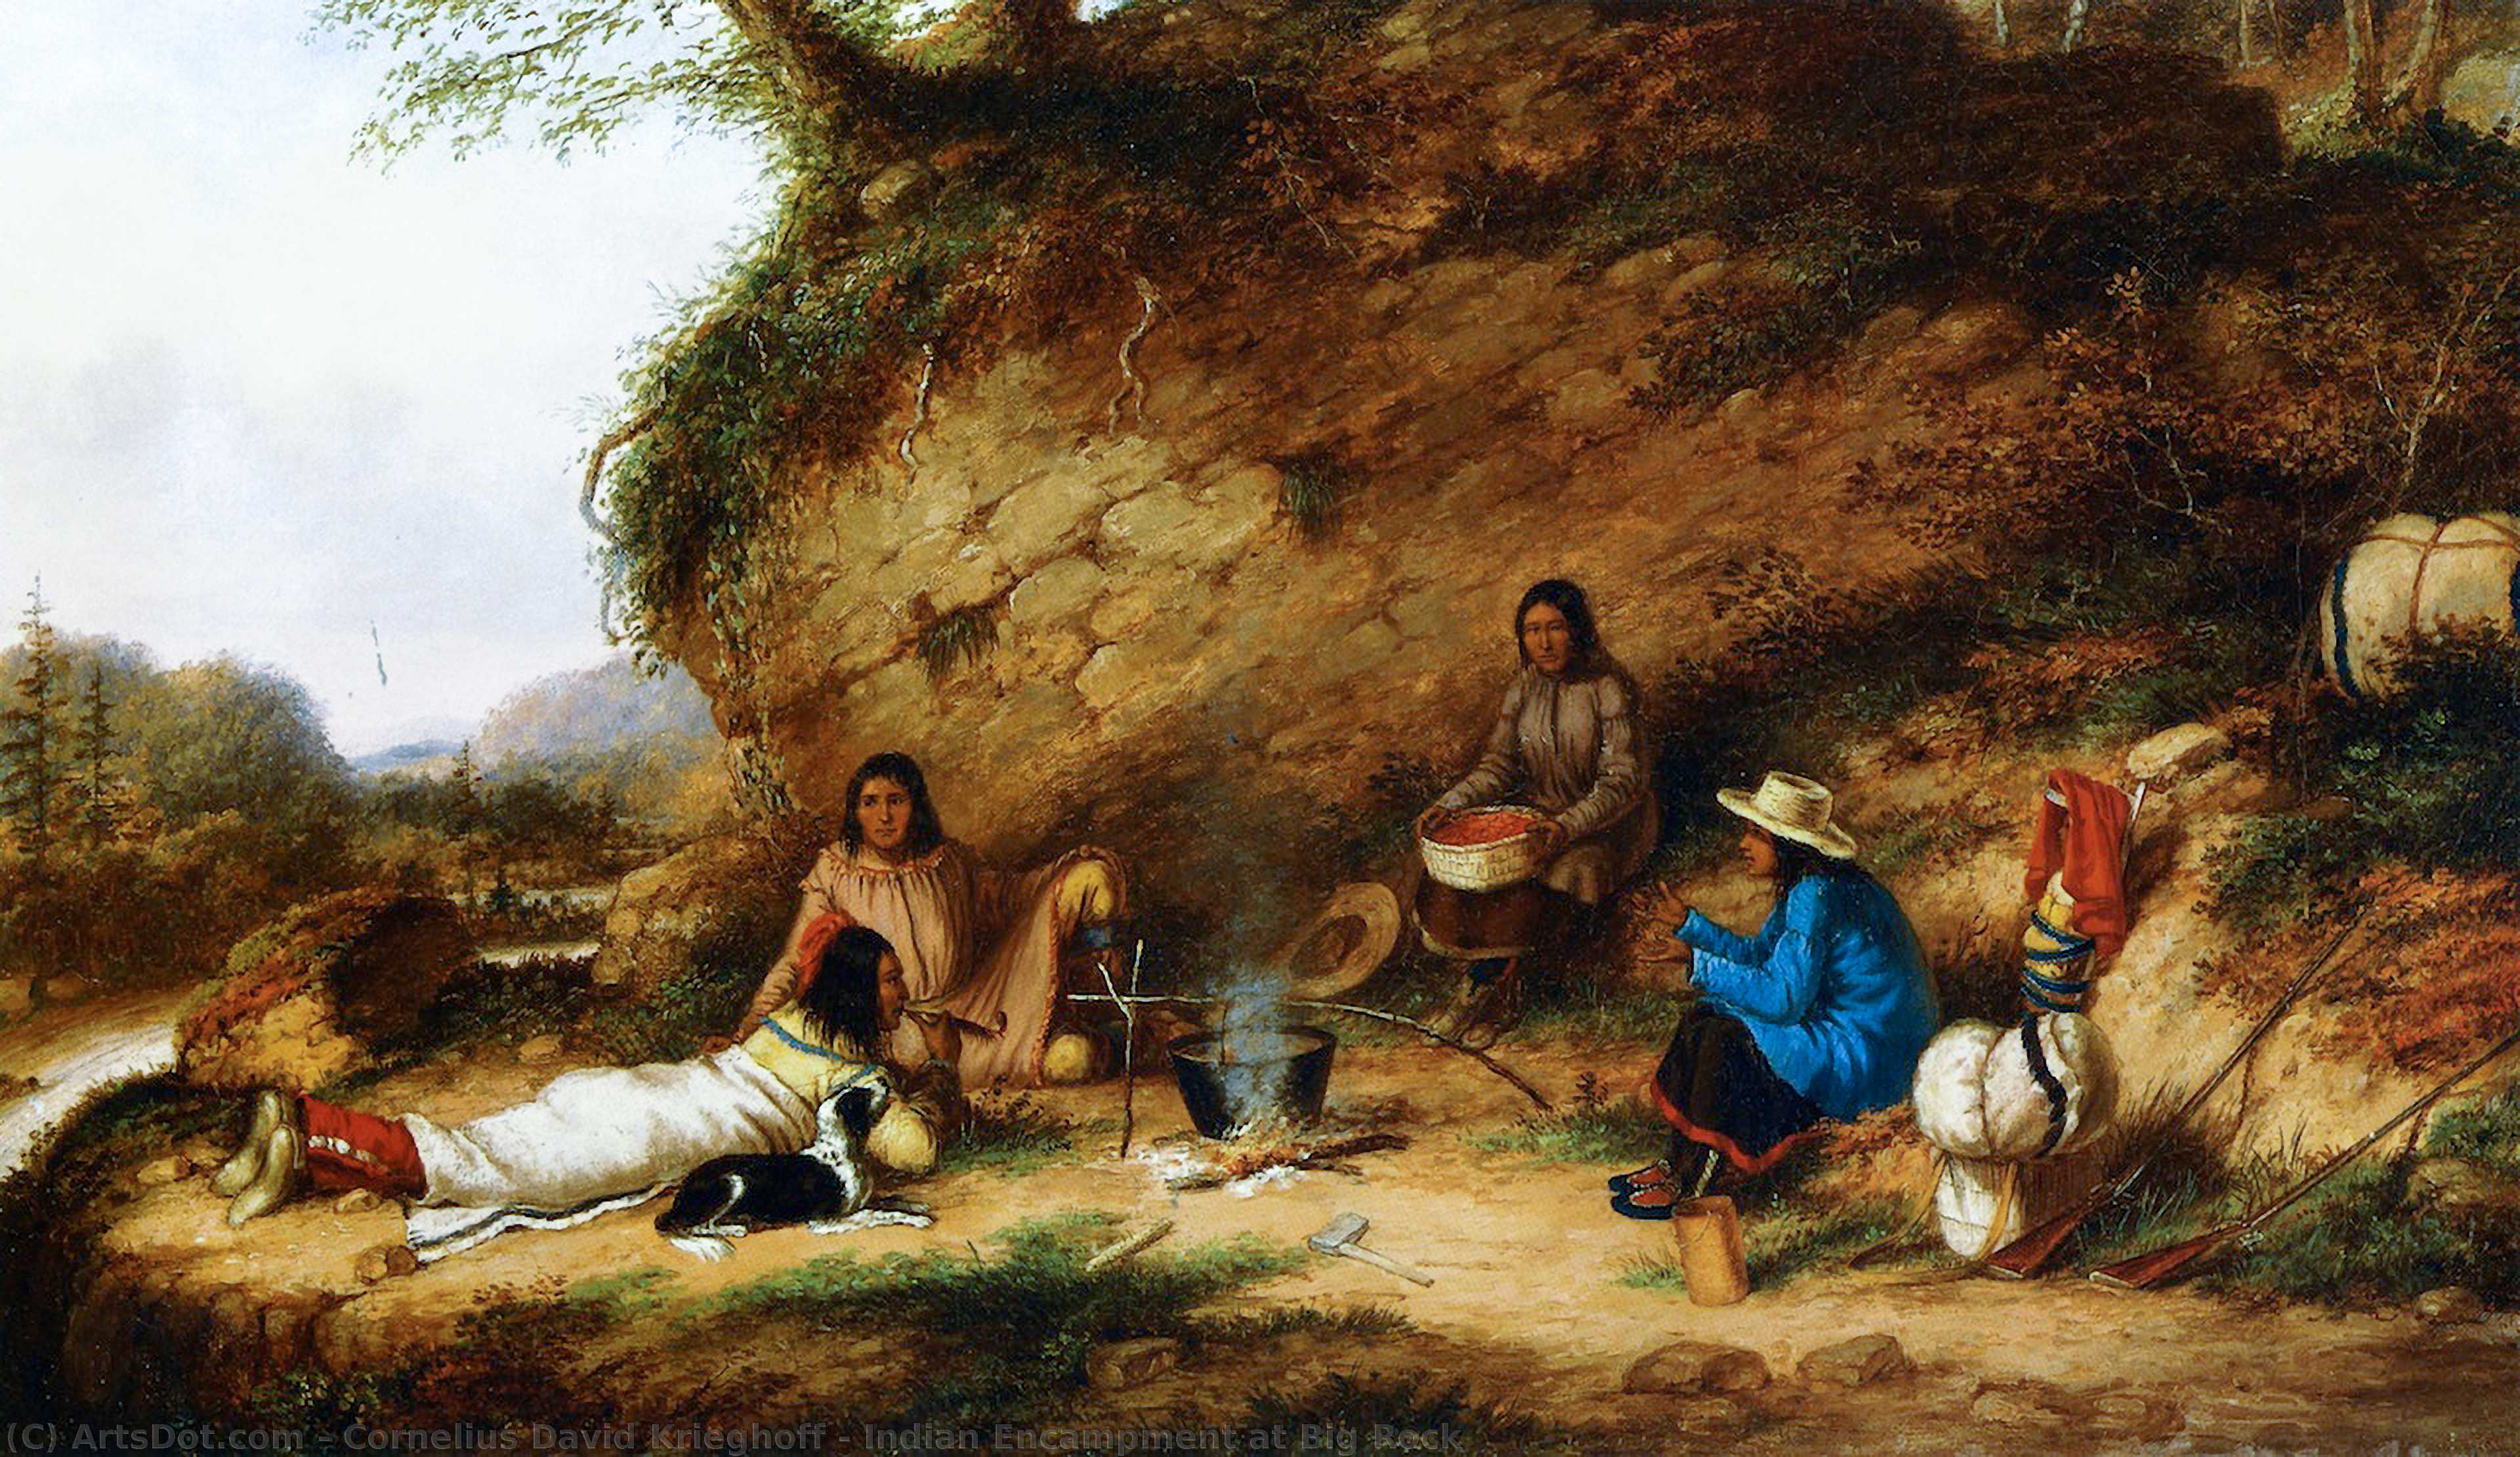 Compra Riproduzioni D'arte Del Museo Indian Encampment at Big Rock, 1853 di Cornelius David Krieghoff (1815-1872, Netherlands) | ArtsDot.com